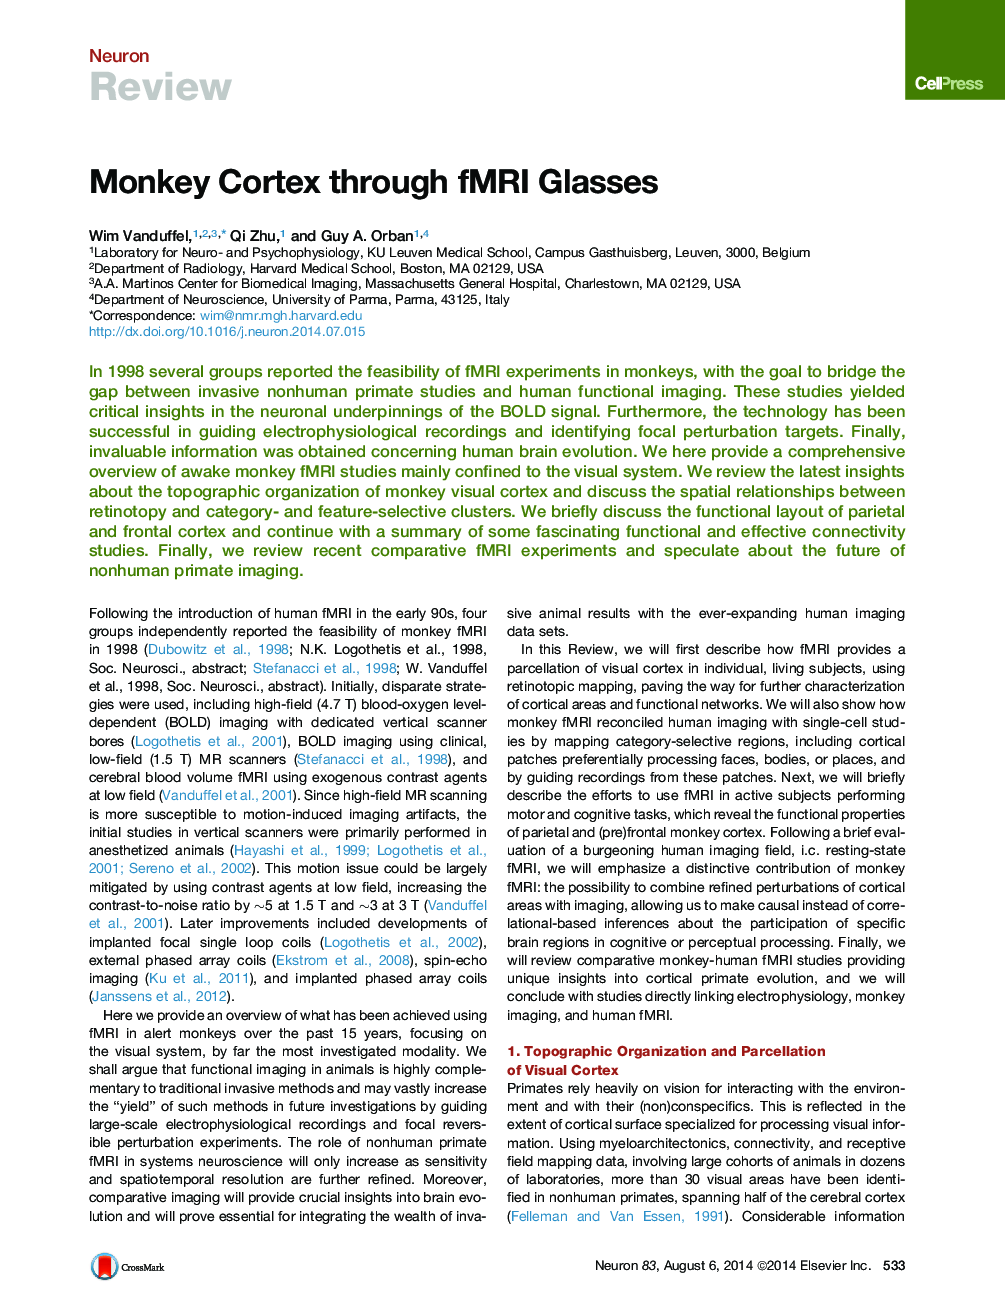 Monkey Cortex through fMRI Glasses